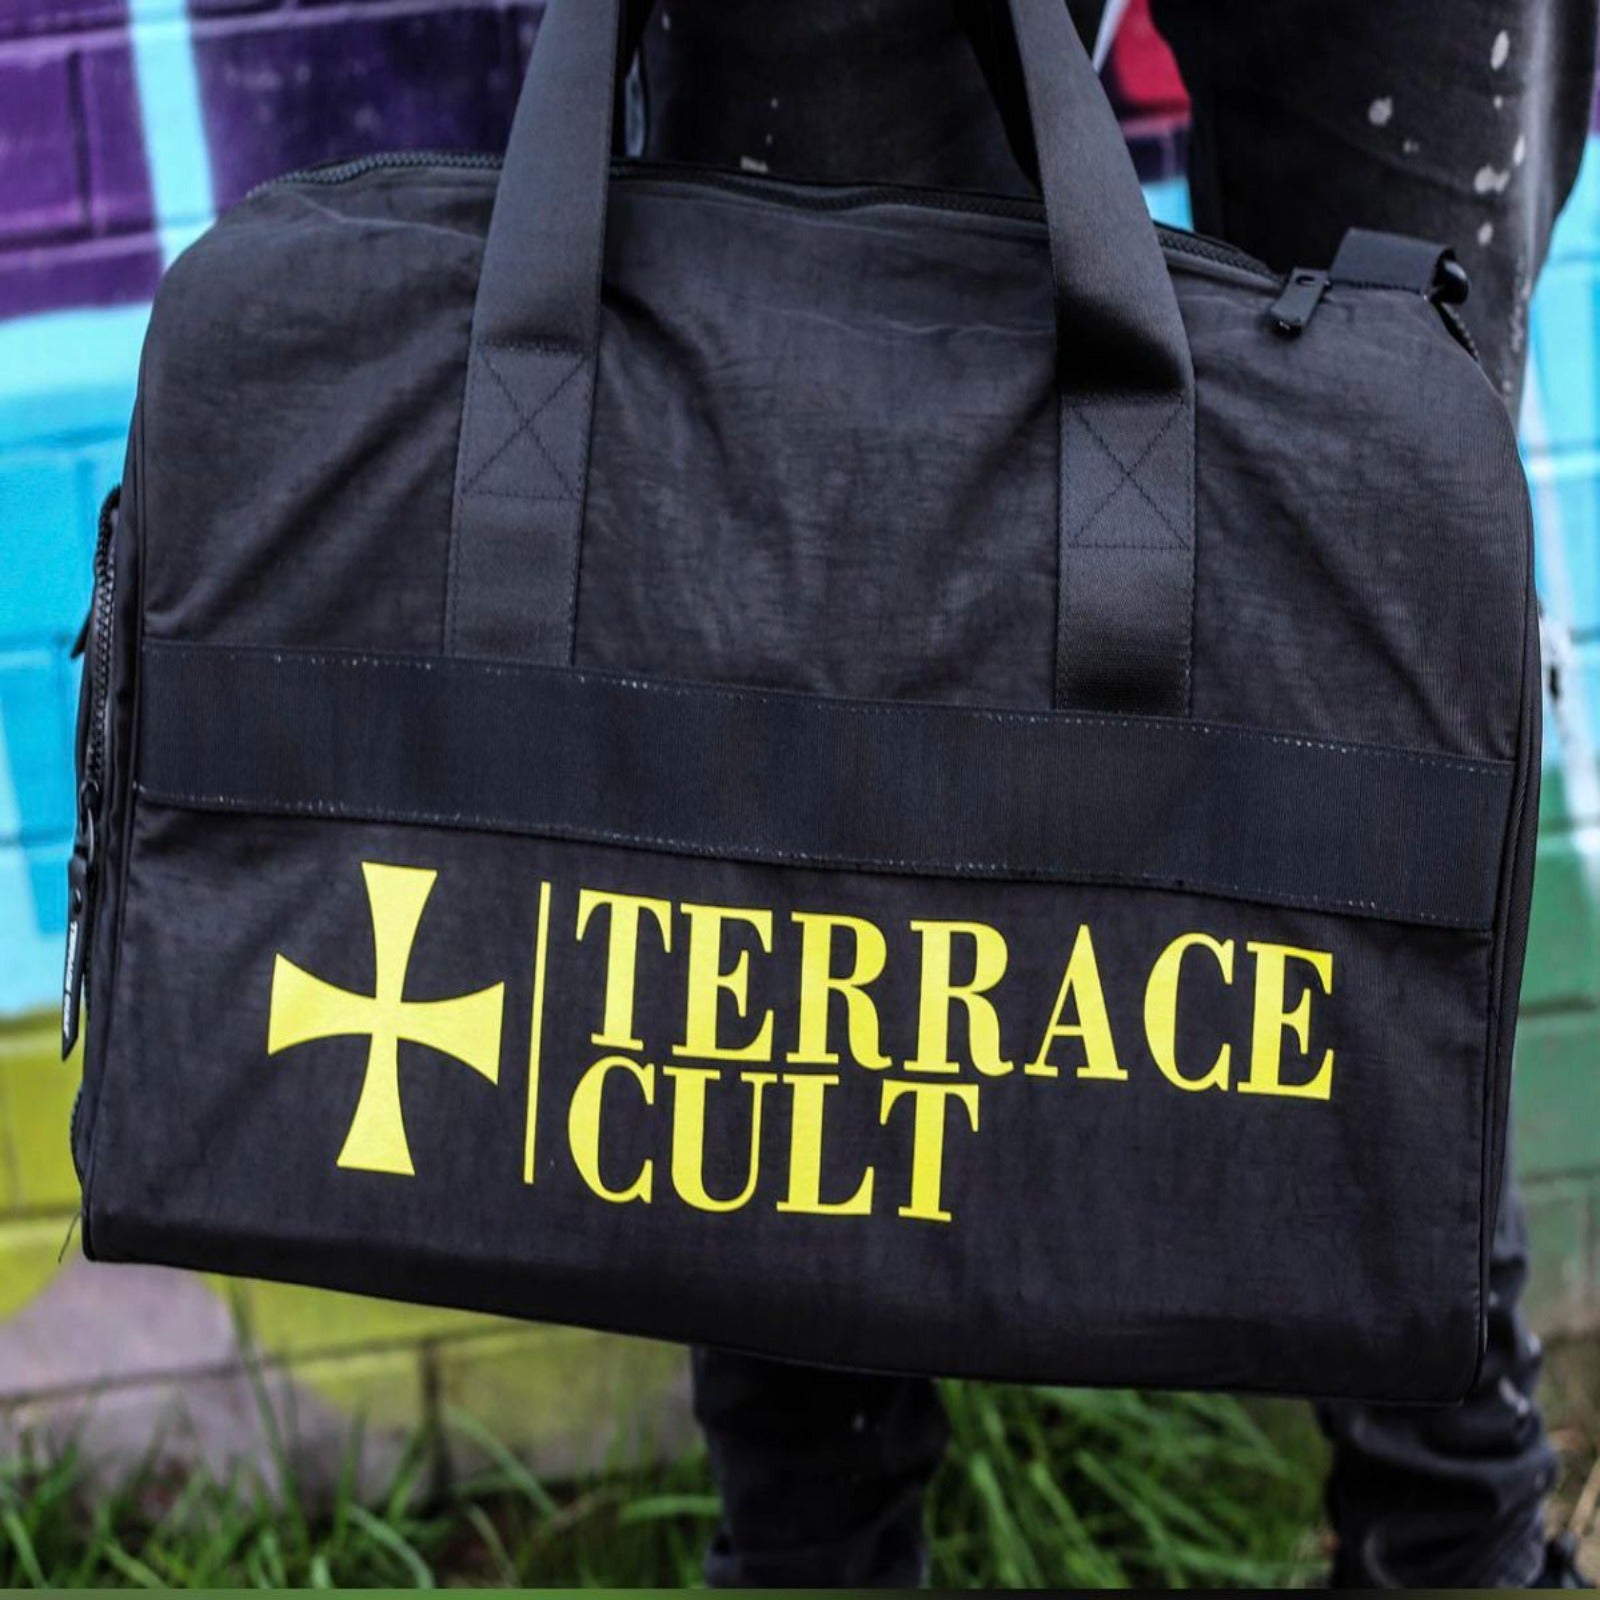 Away Day Travel Bag - Terrace Cult